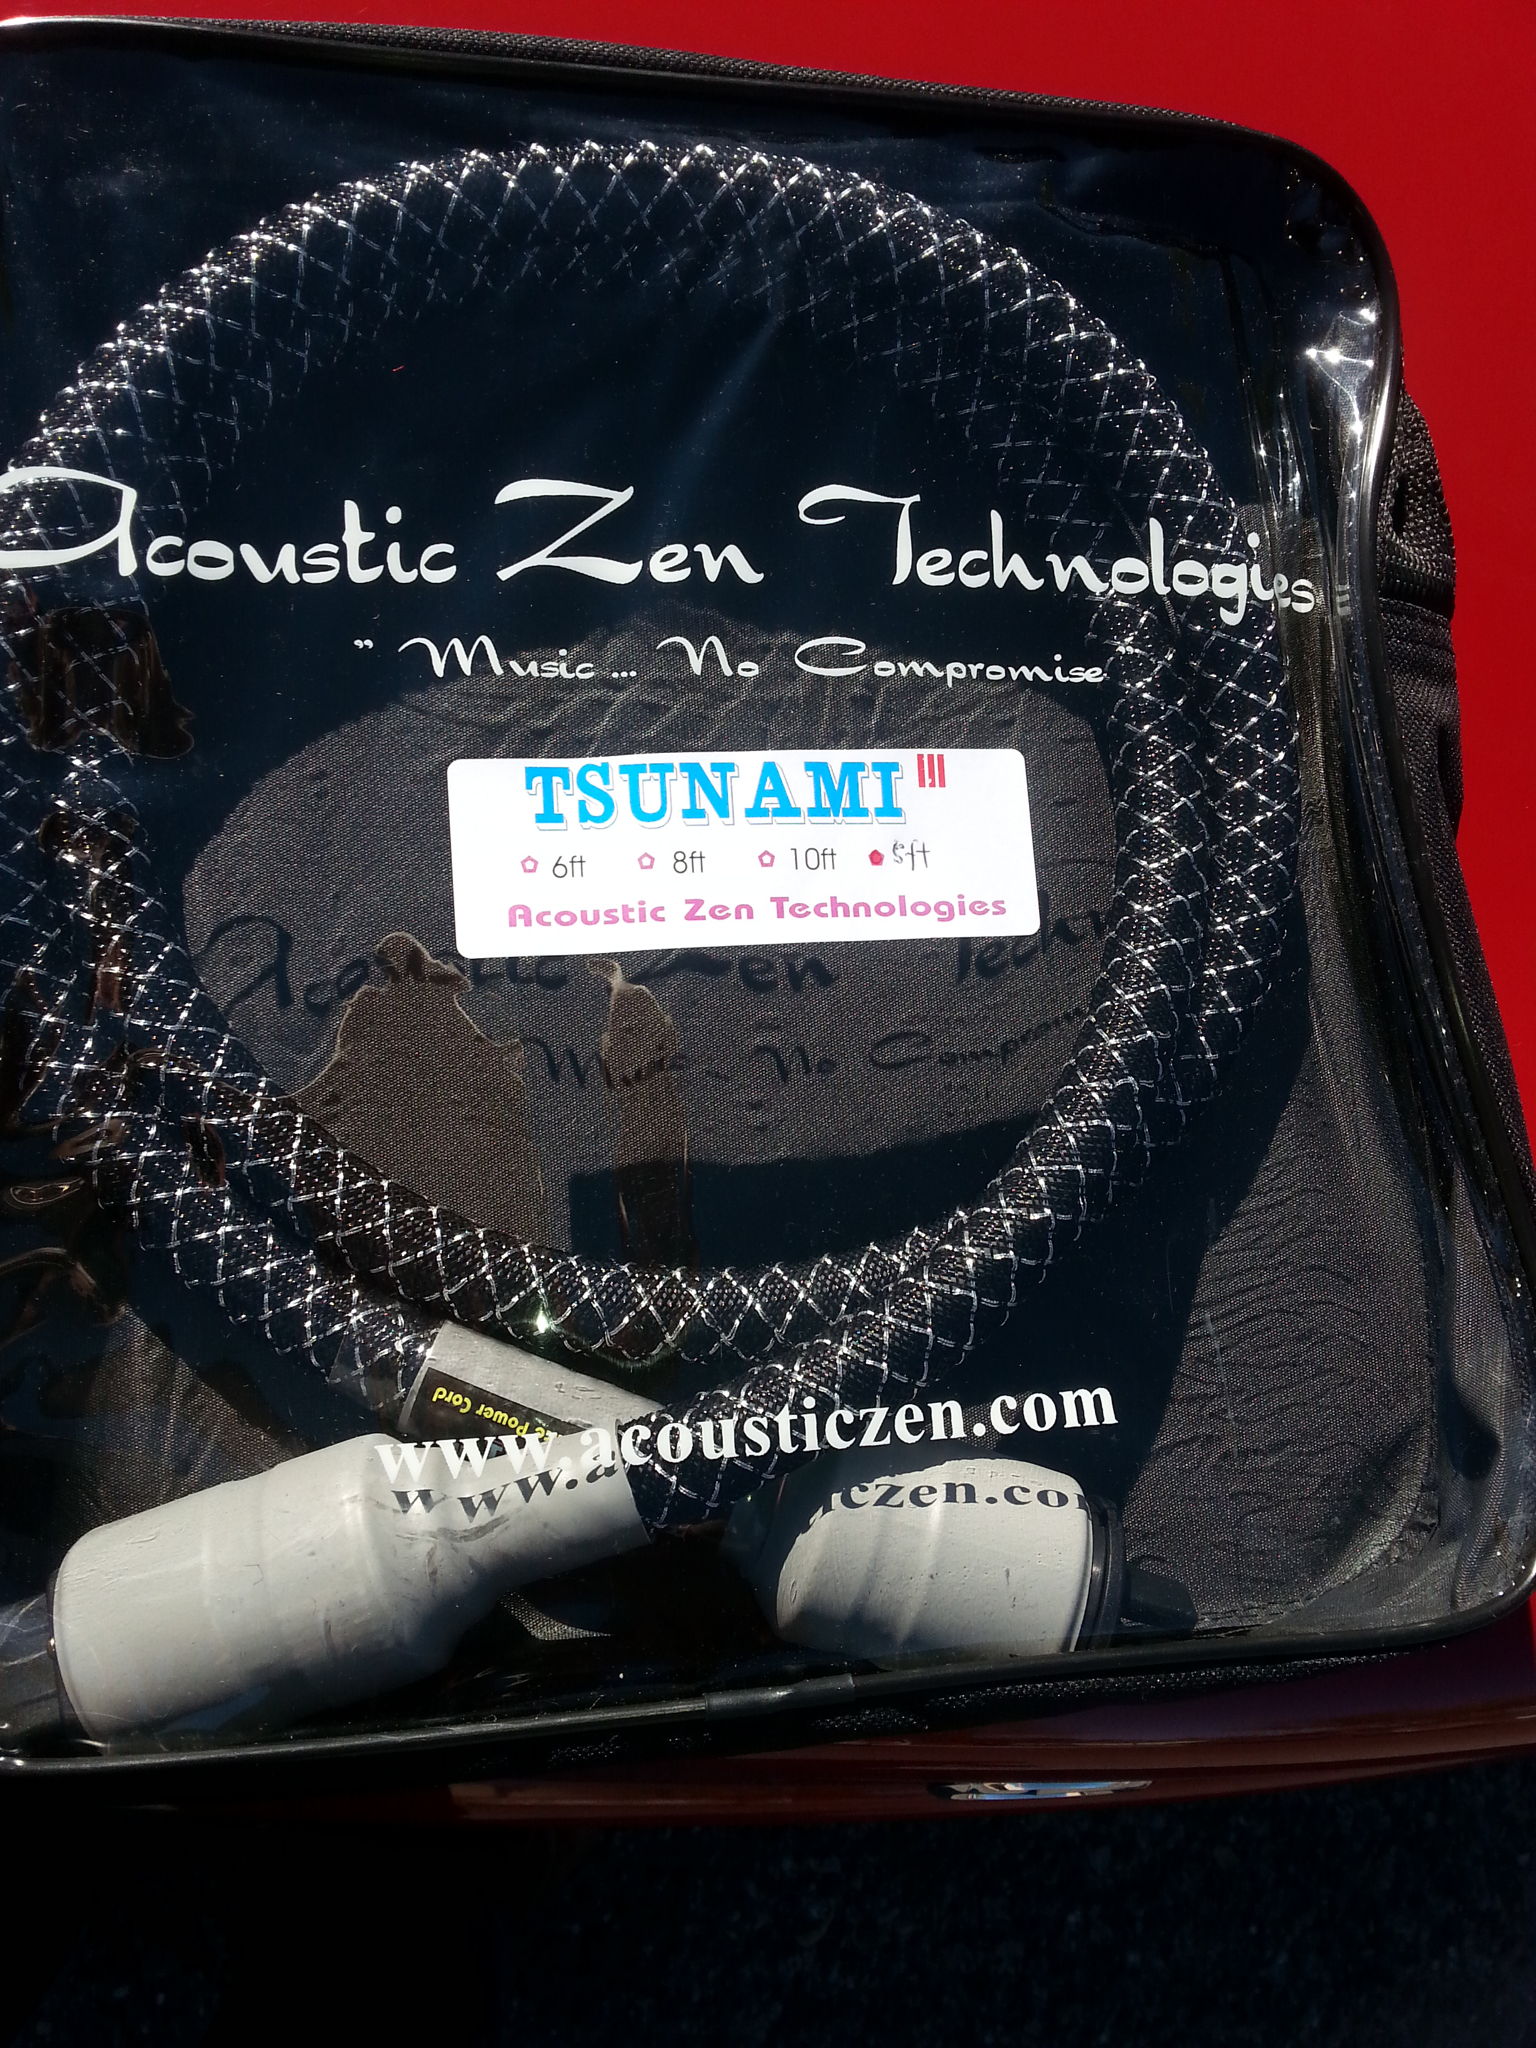 Acoustic Zen Tsunami III power cable demo with warranty... 6